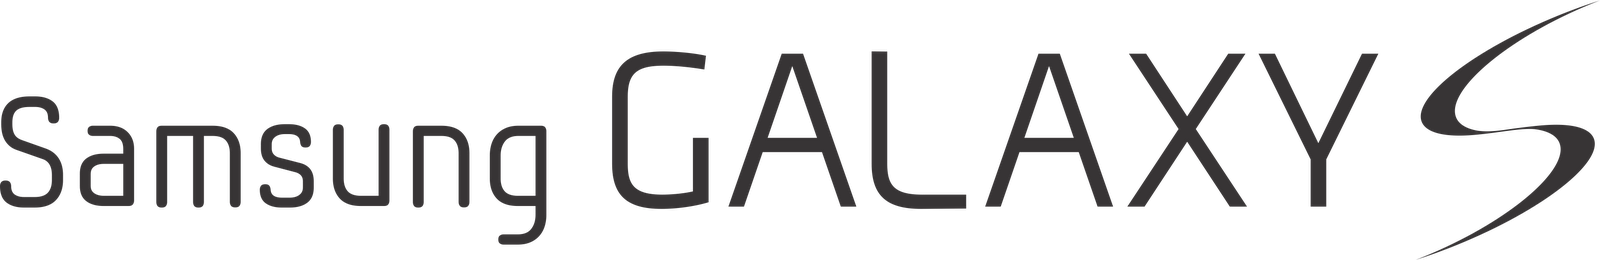 Https samsung ru. Samsung Galaxy logo. Логотип Samsung Galaxy s2. Товарный знак самсунг Медисон. Galaxy a Series logo.